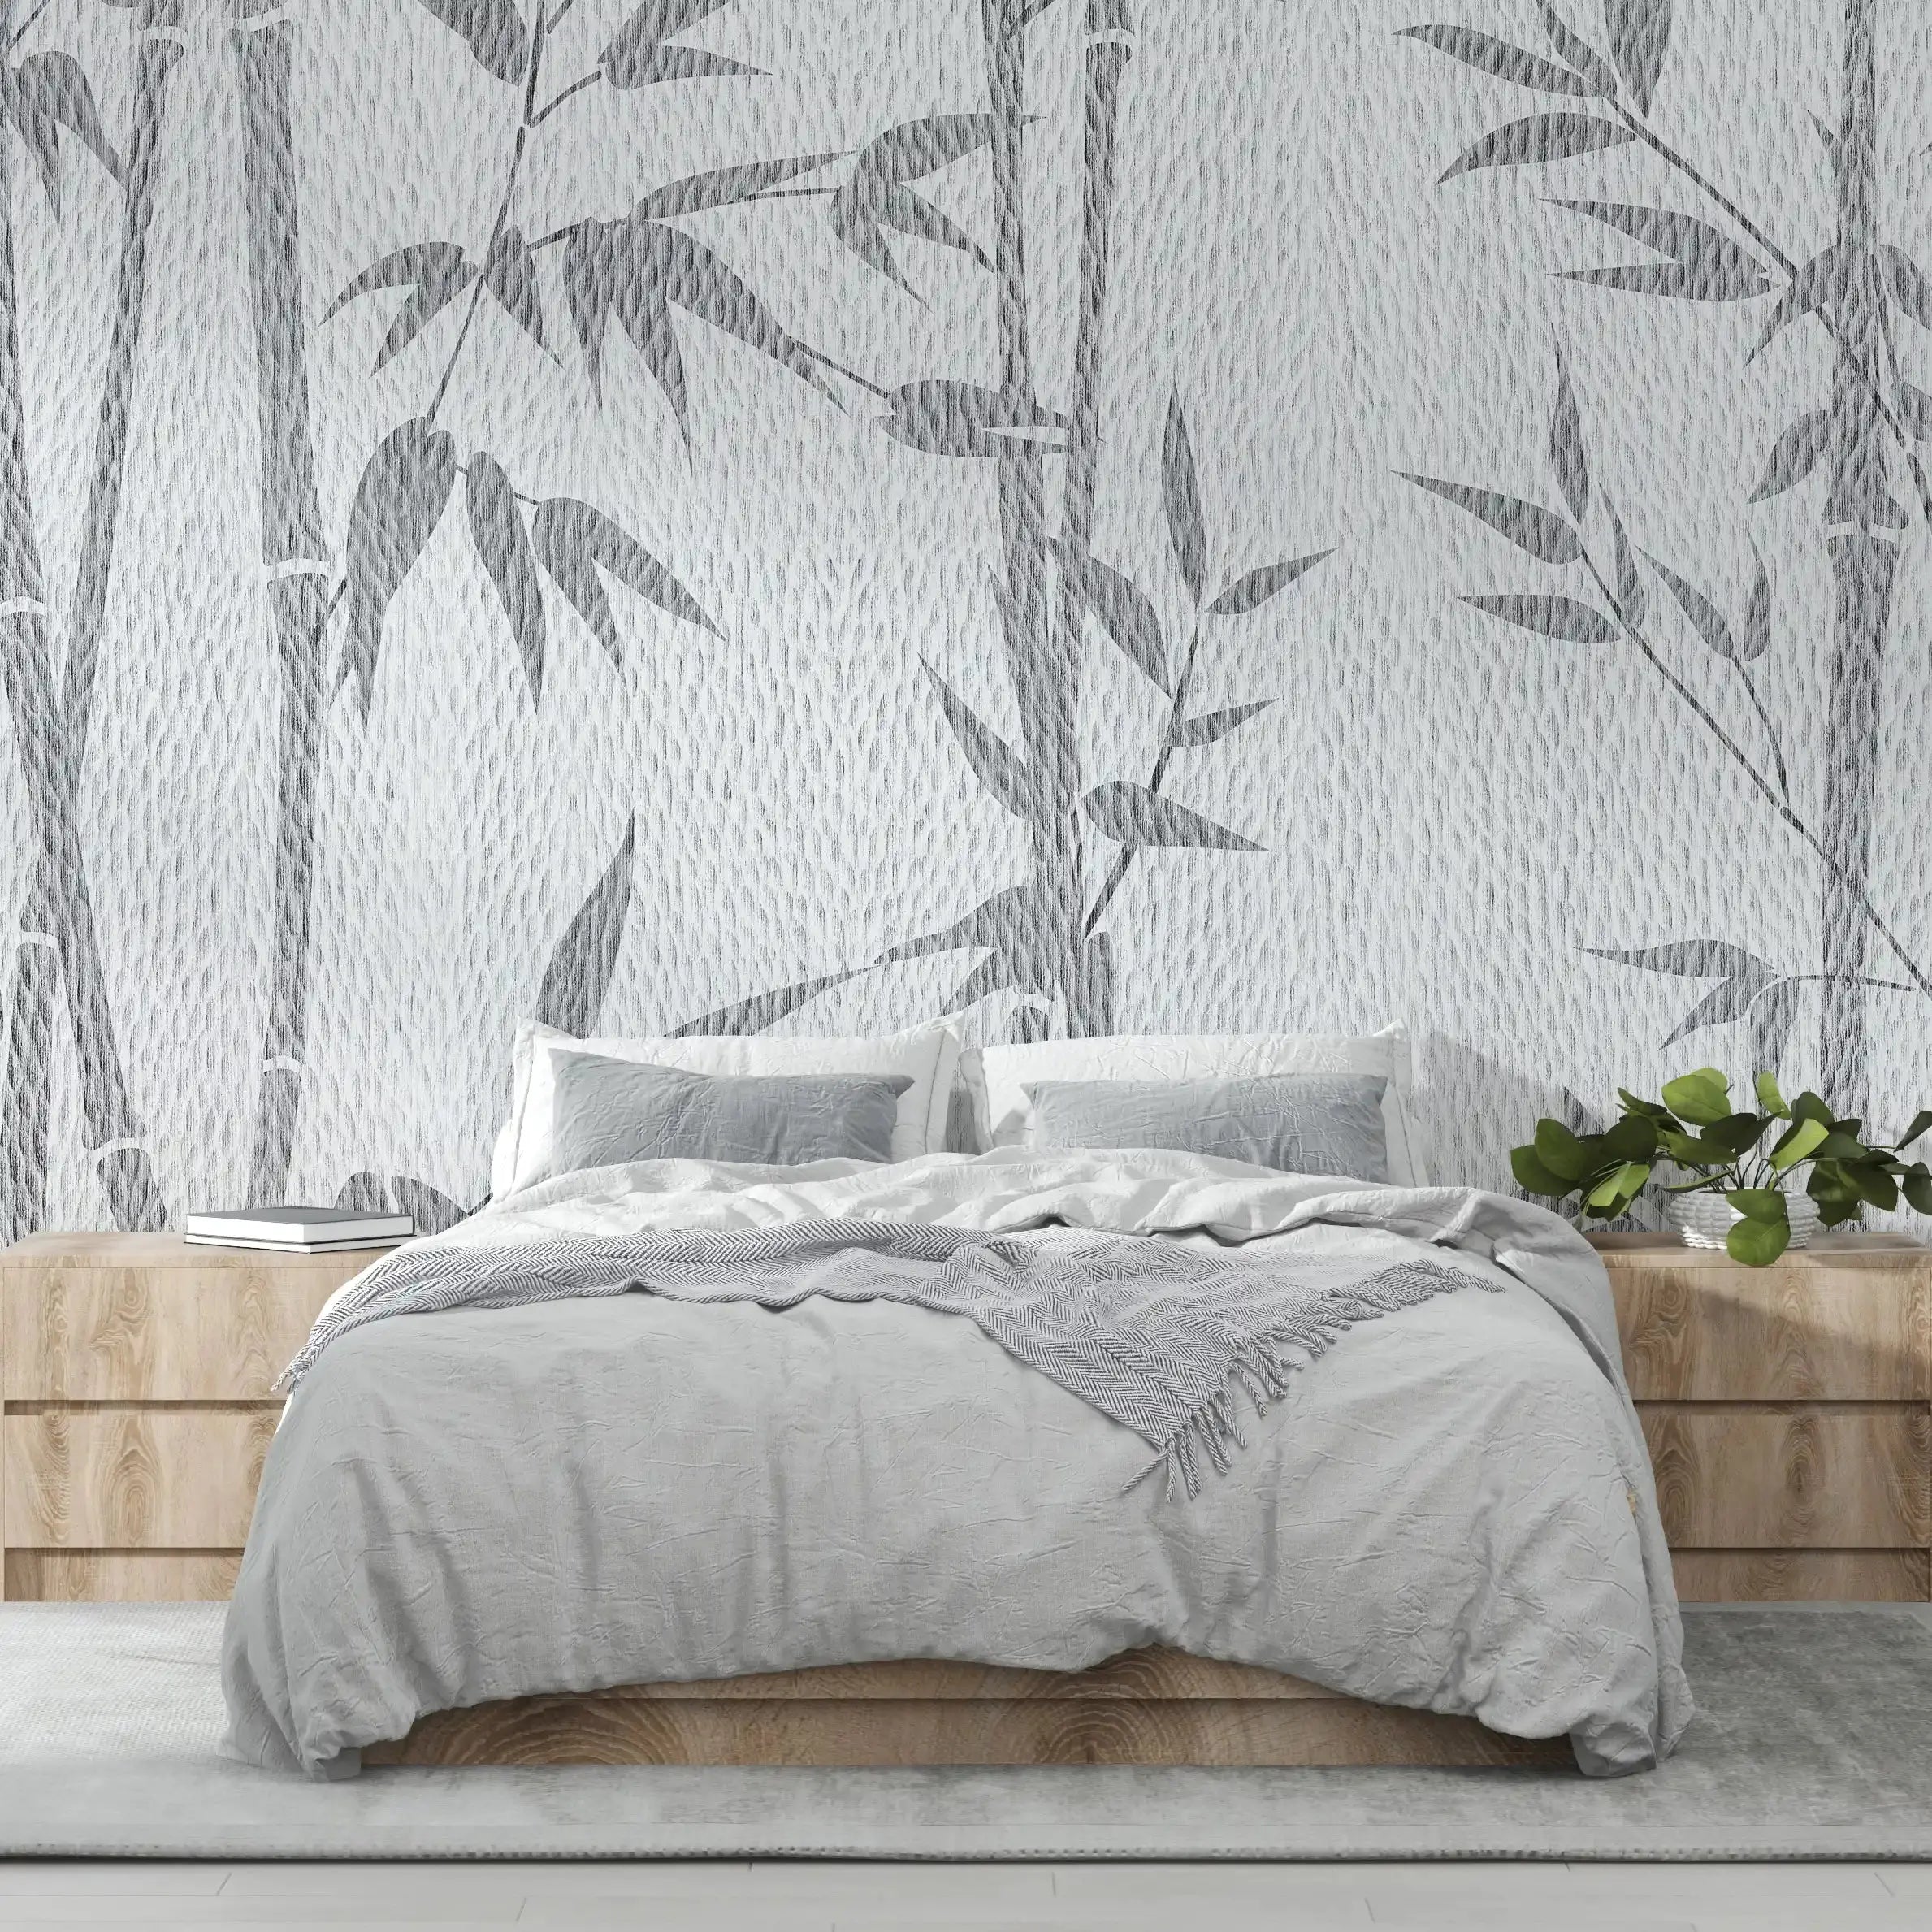 3020-E / Tropical Bamboo Leaf Wallpaper, Peel and Stick, Easy Install, Adhesive Boho Decor for Kitchen, Bathroom - Artevella